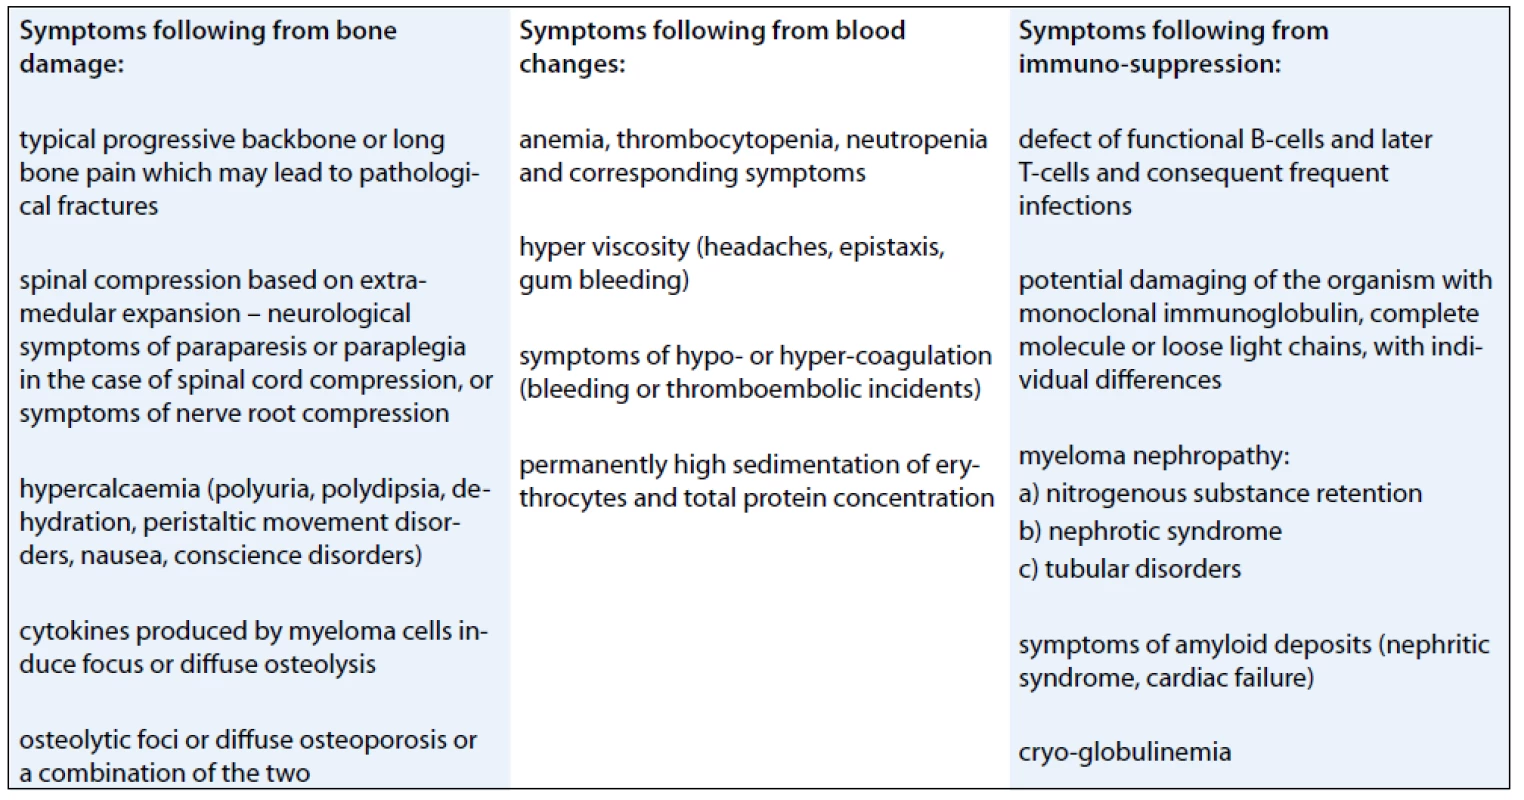 Symptoms of multiple myeloma.